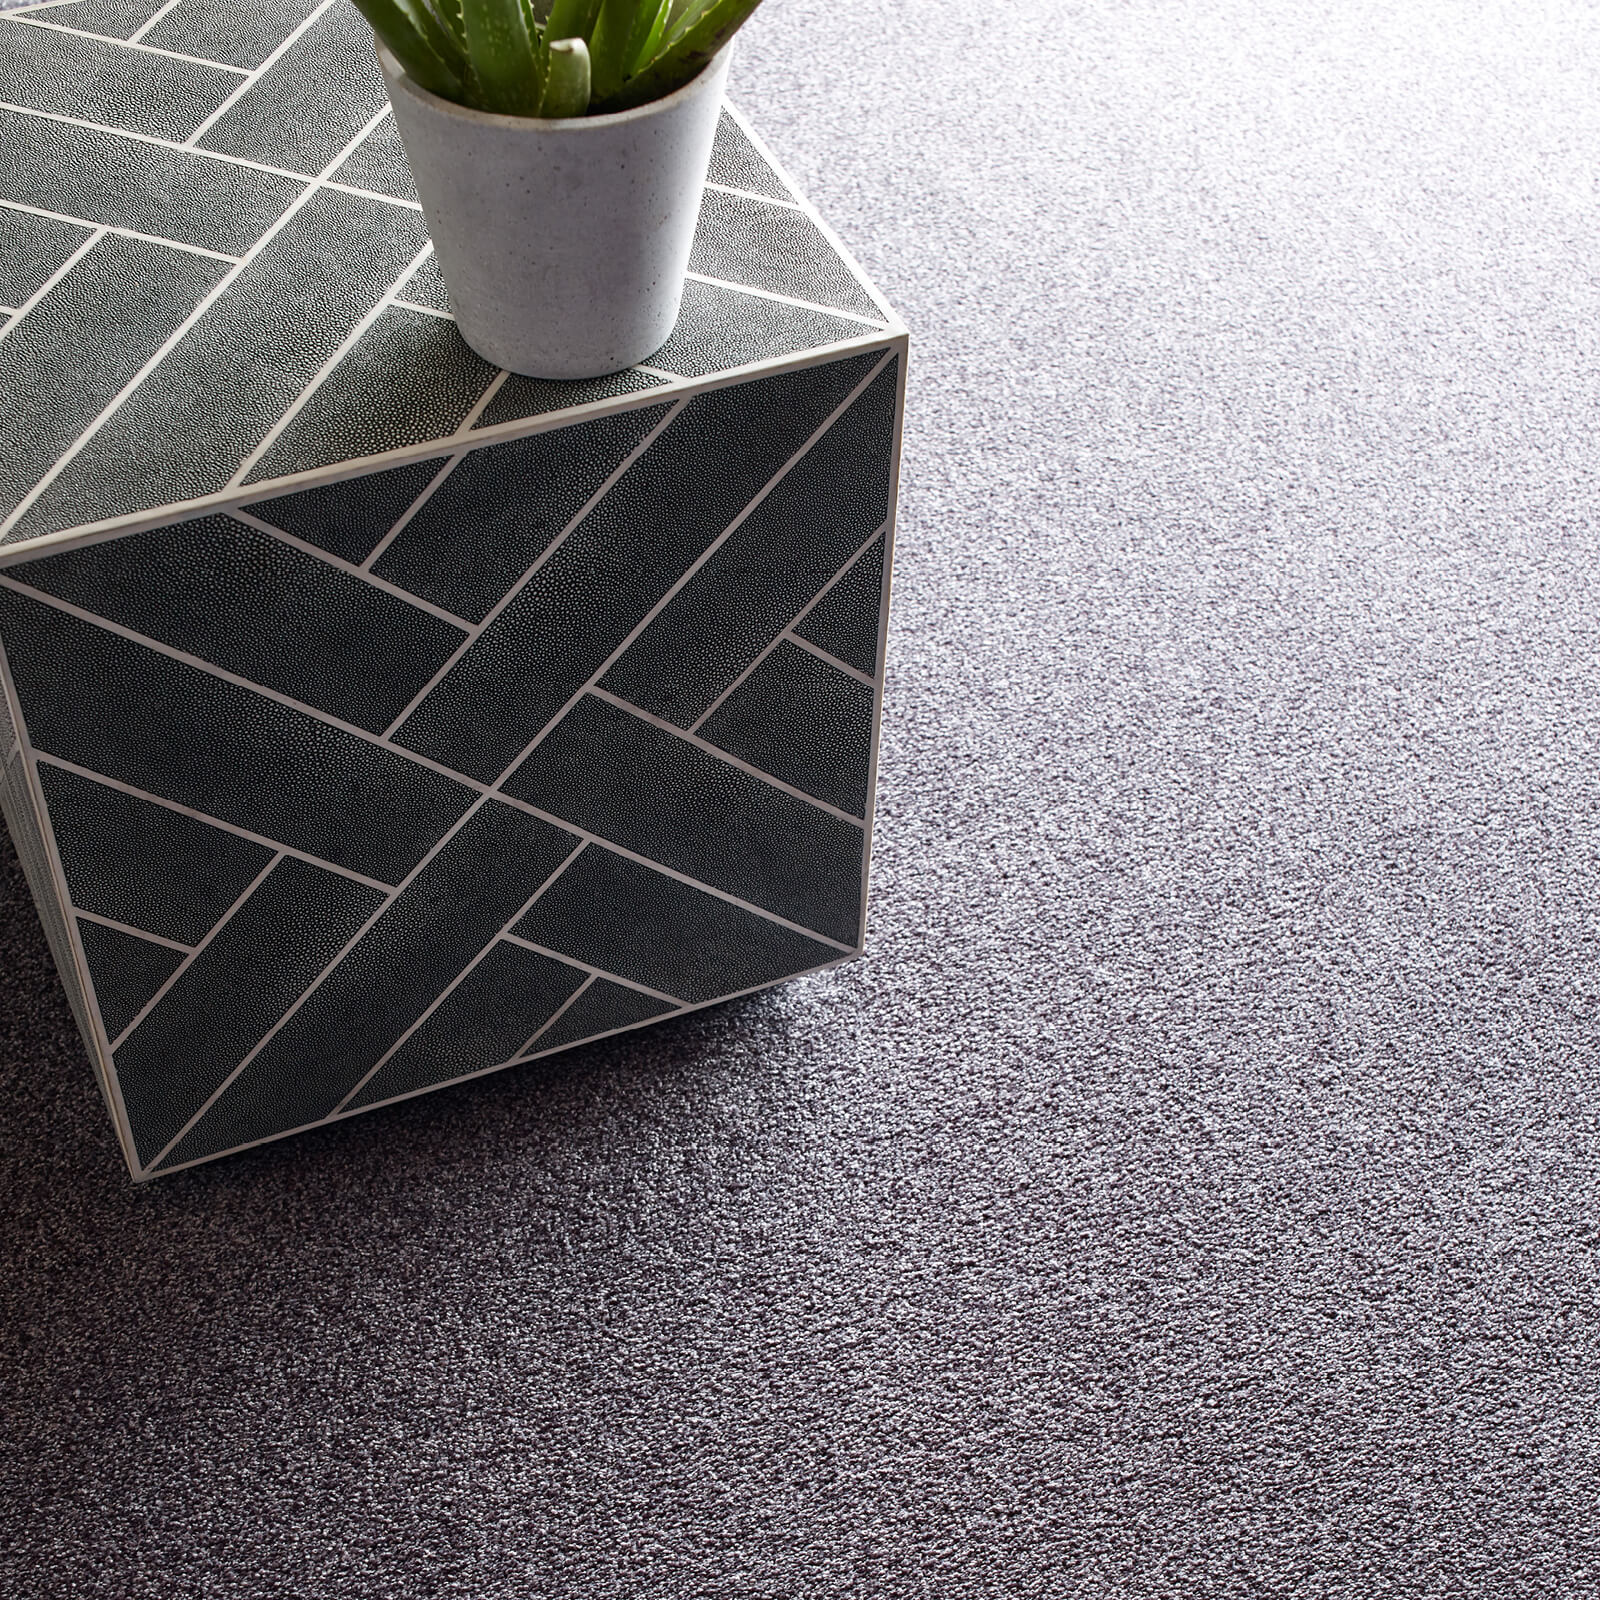 Shaw floors find your comfort | West Michigan Carpet Center